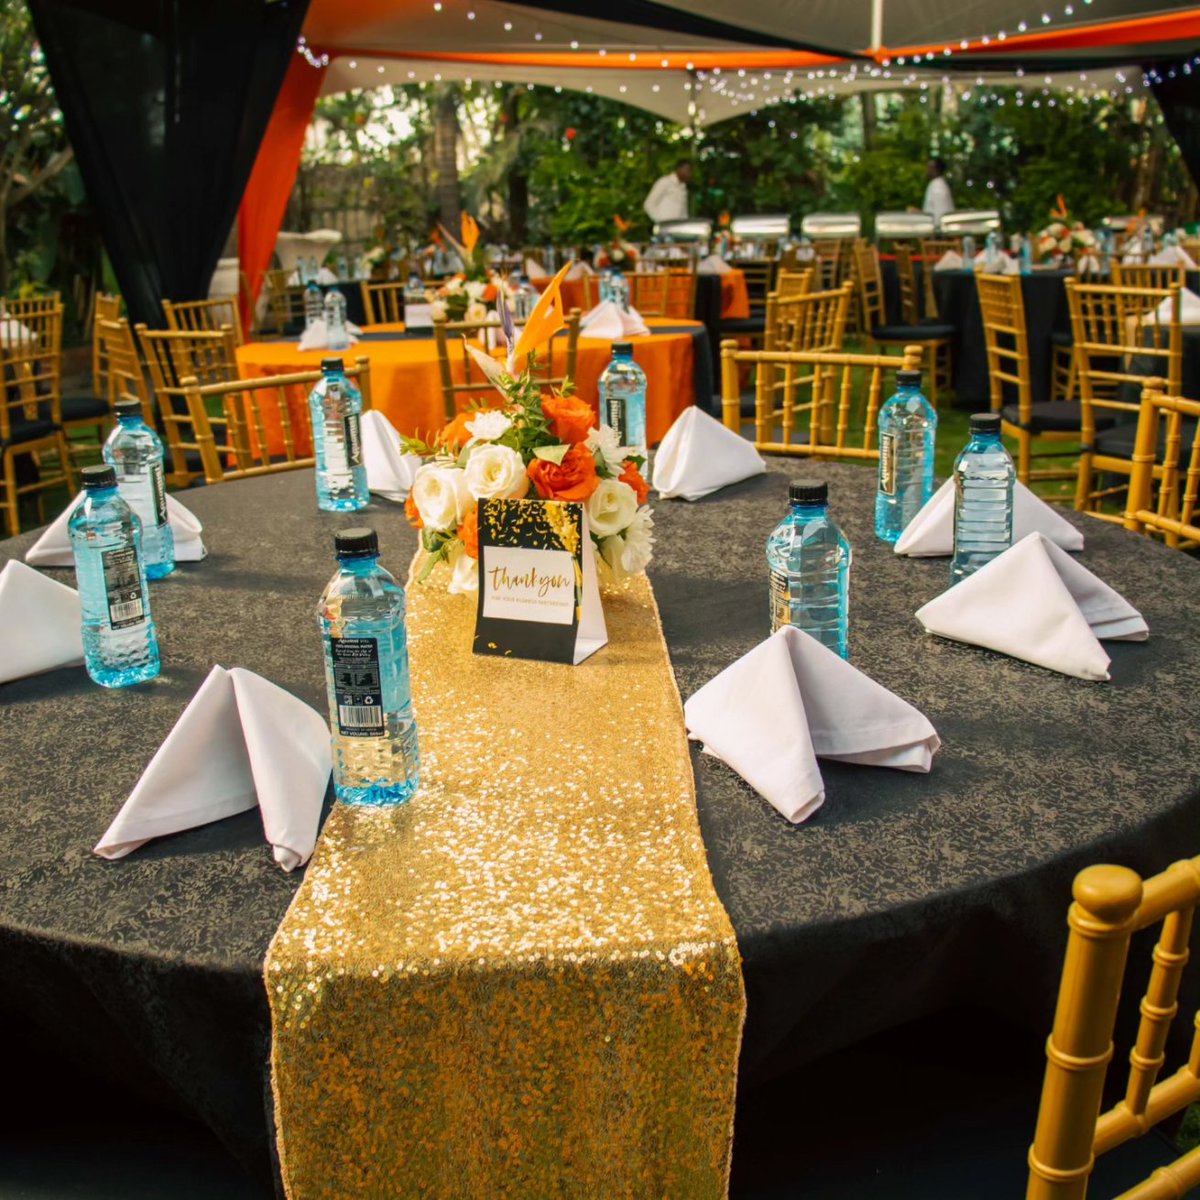 𝙁𝙤𝙧 𝙖𝙡𝙡 𝙮𝙤𝙪𝙧 𝙚𝙭𝙘𝙡𝙪𝙨𝙞𝙫𝙚 𝙚𝙫𝙚𝙣𝙩𝙨 𝙖𝙣𝙙 𝙥𝙧𝙞𝙘𝙚𝙡𝙚𝙨𝙨 𝙢𝙚𝙢𝙤𝙧𝙞𝙚𝙨. 𝘾𝙖𝙡𝙡 𝙪𝙨 𝙩𝙤𝙙𝙖𝙮.

0722 445 242 | 0722 443 400

#raila #Gladyswanga #thursdayvibes
#eventsnairobi #events #venue #Parties #staffparty #conference #privateparty #weddingvenue